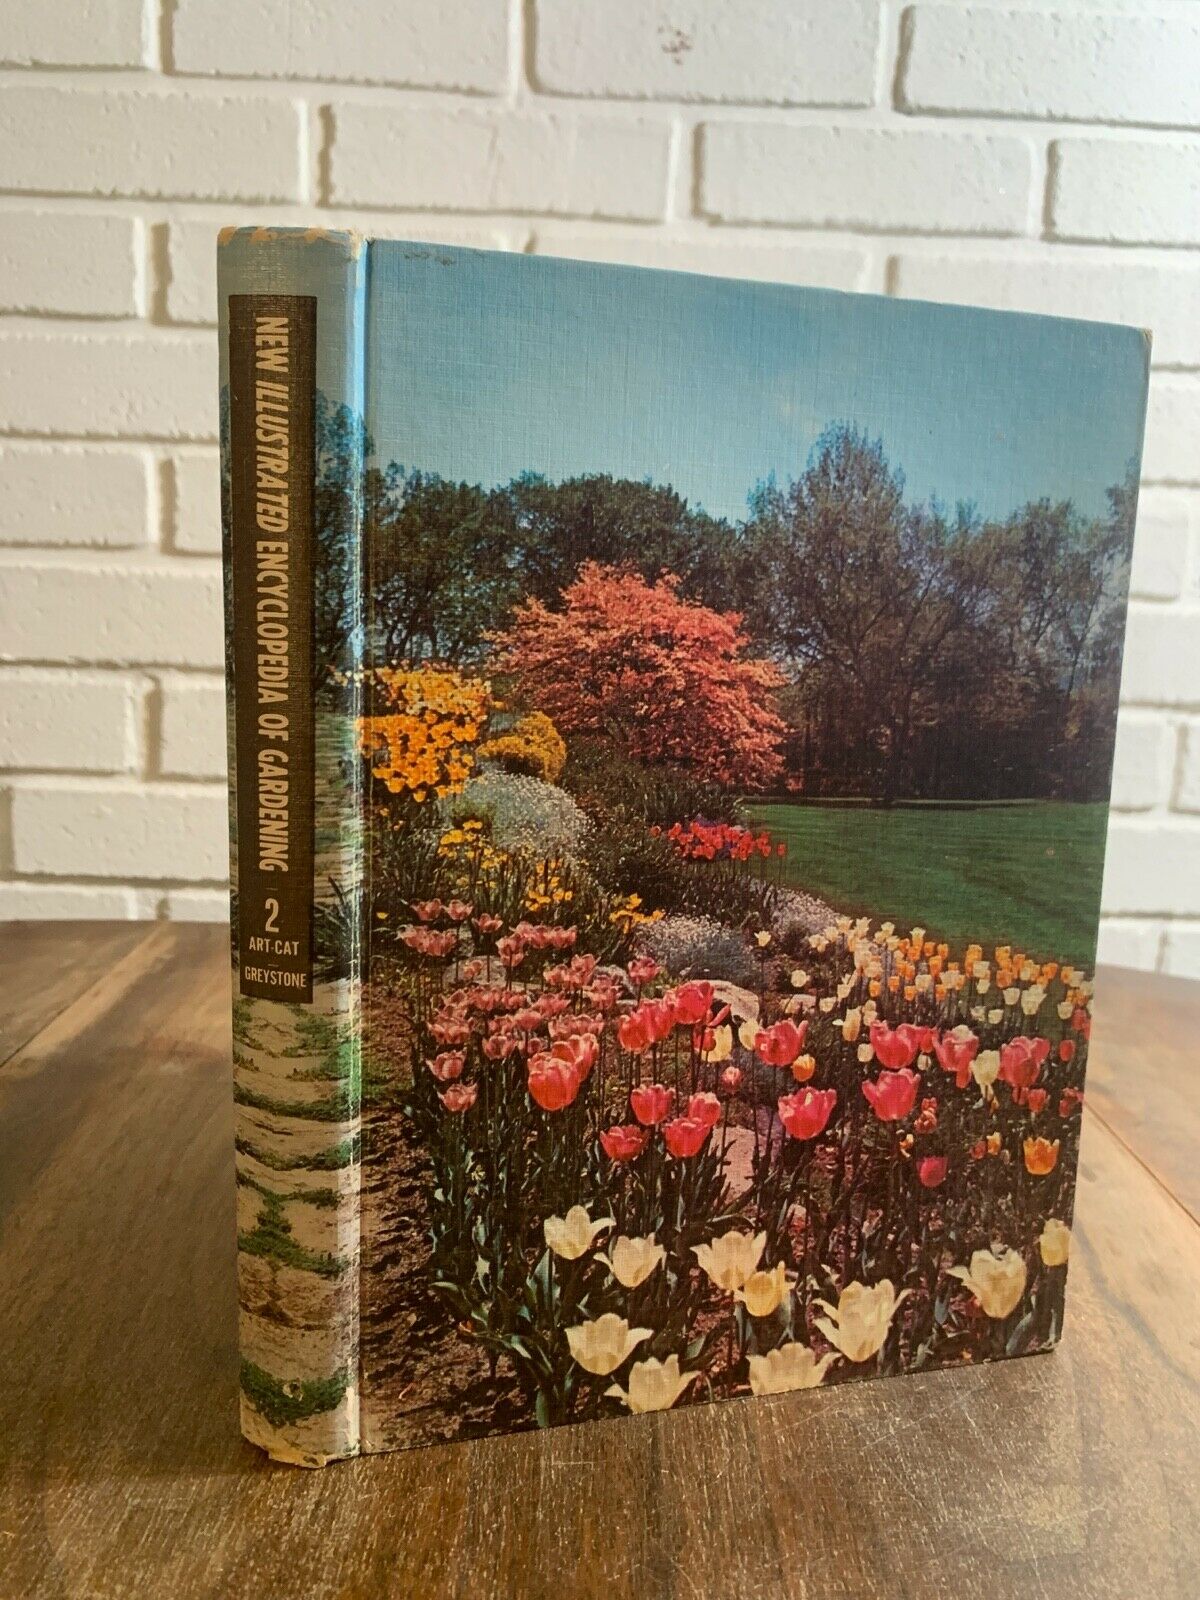 New Illustrated Encyclopedia of Gardening 1960s Hardcover Volume 2 (3B)